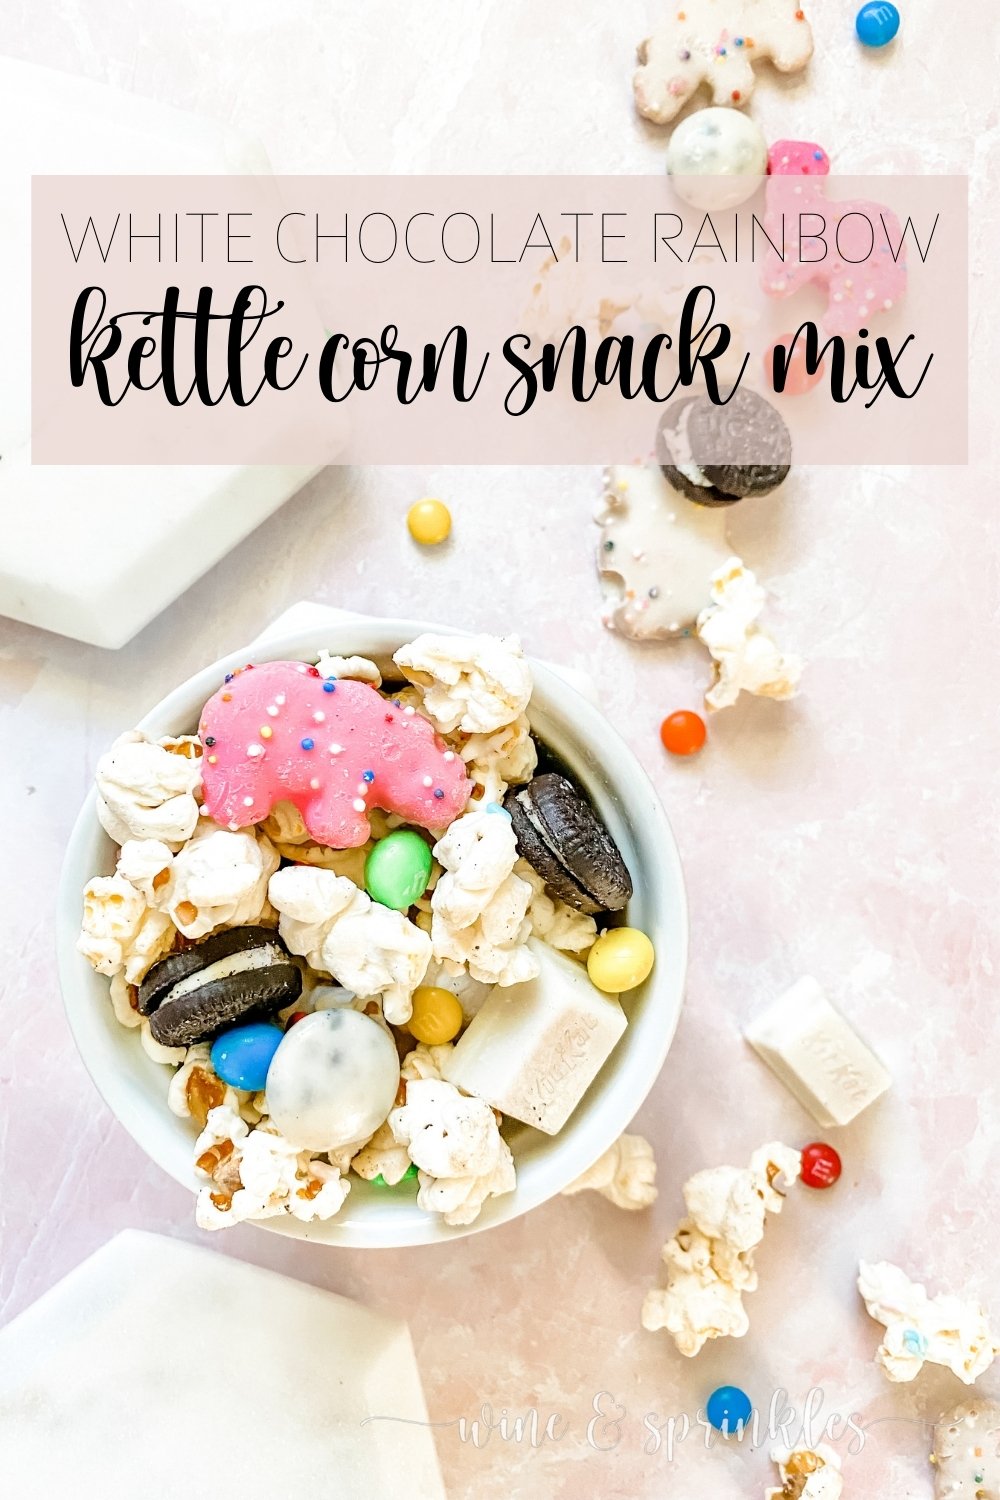 White Chocolate Rainbow Kettle Corn Cookies and Cream Snack Mix